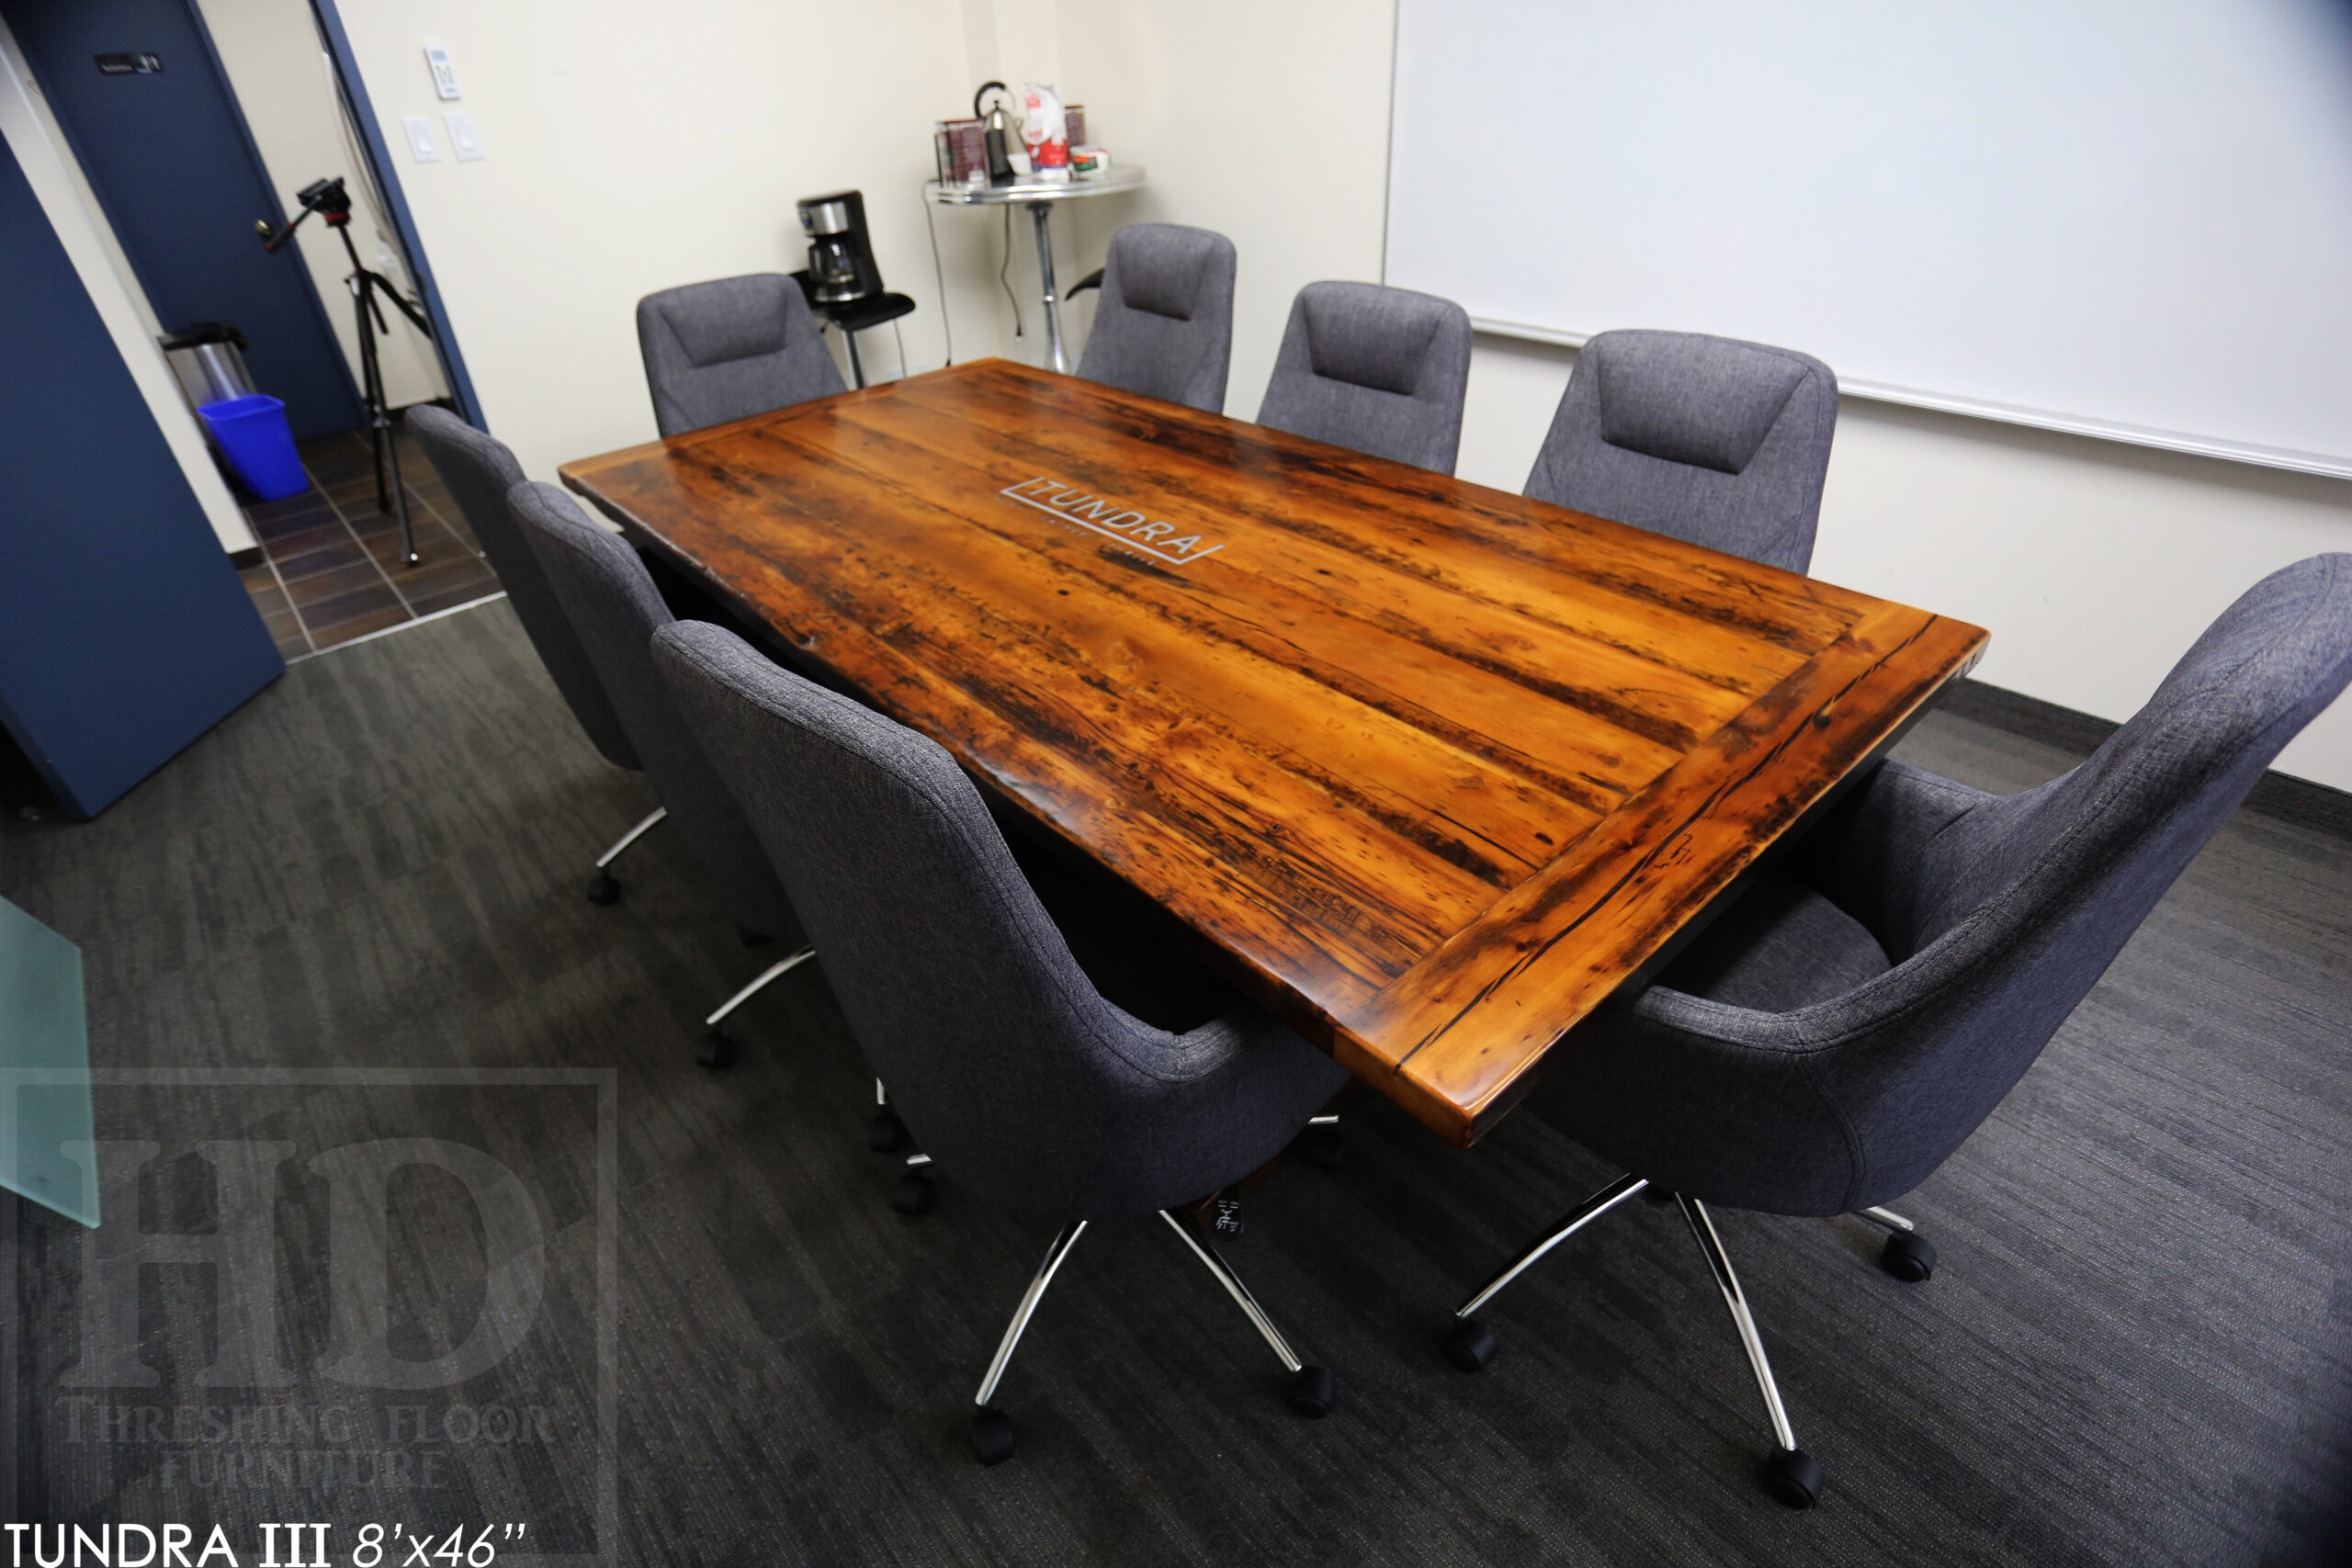 Ontario Boardroom Table made from Ontario Barnwood custom made by HD Threshing Floor Furniture / www.table.ca